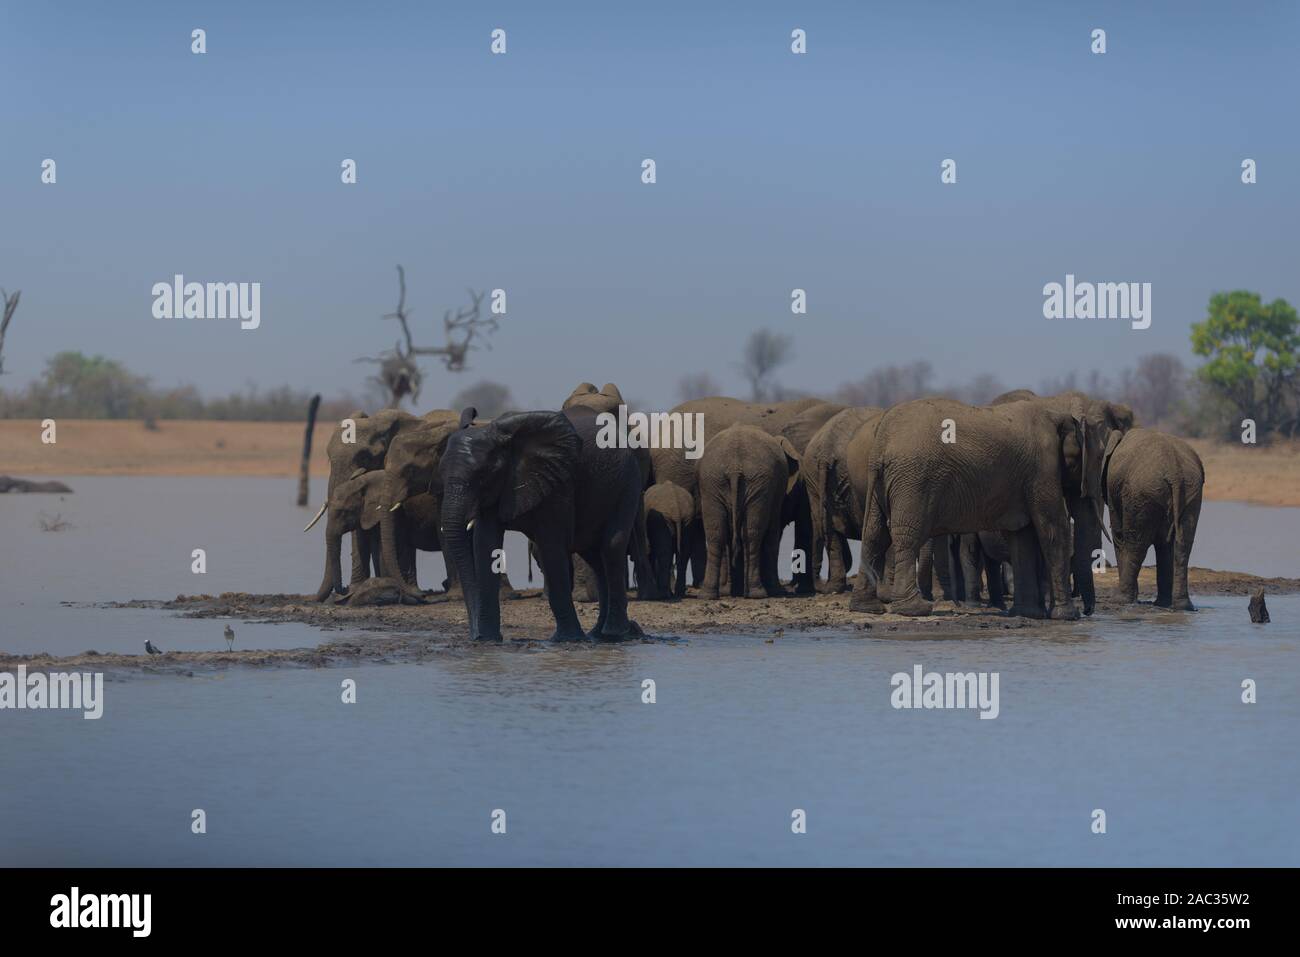 Elephant herd gather elephants African elephant Stock Photo